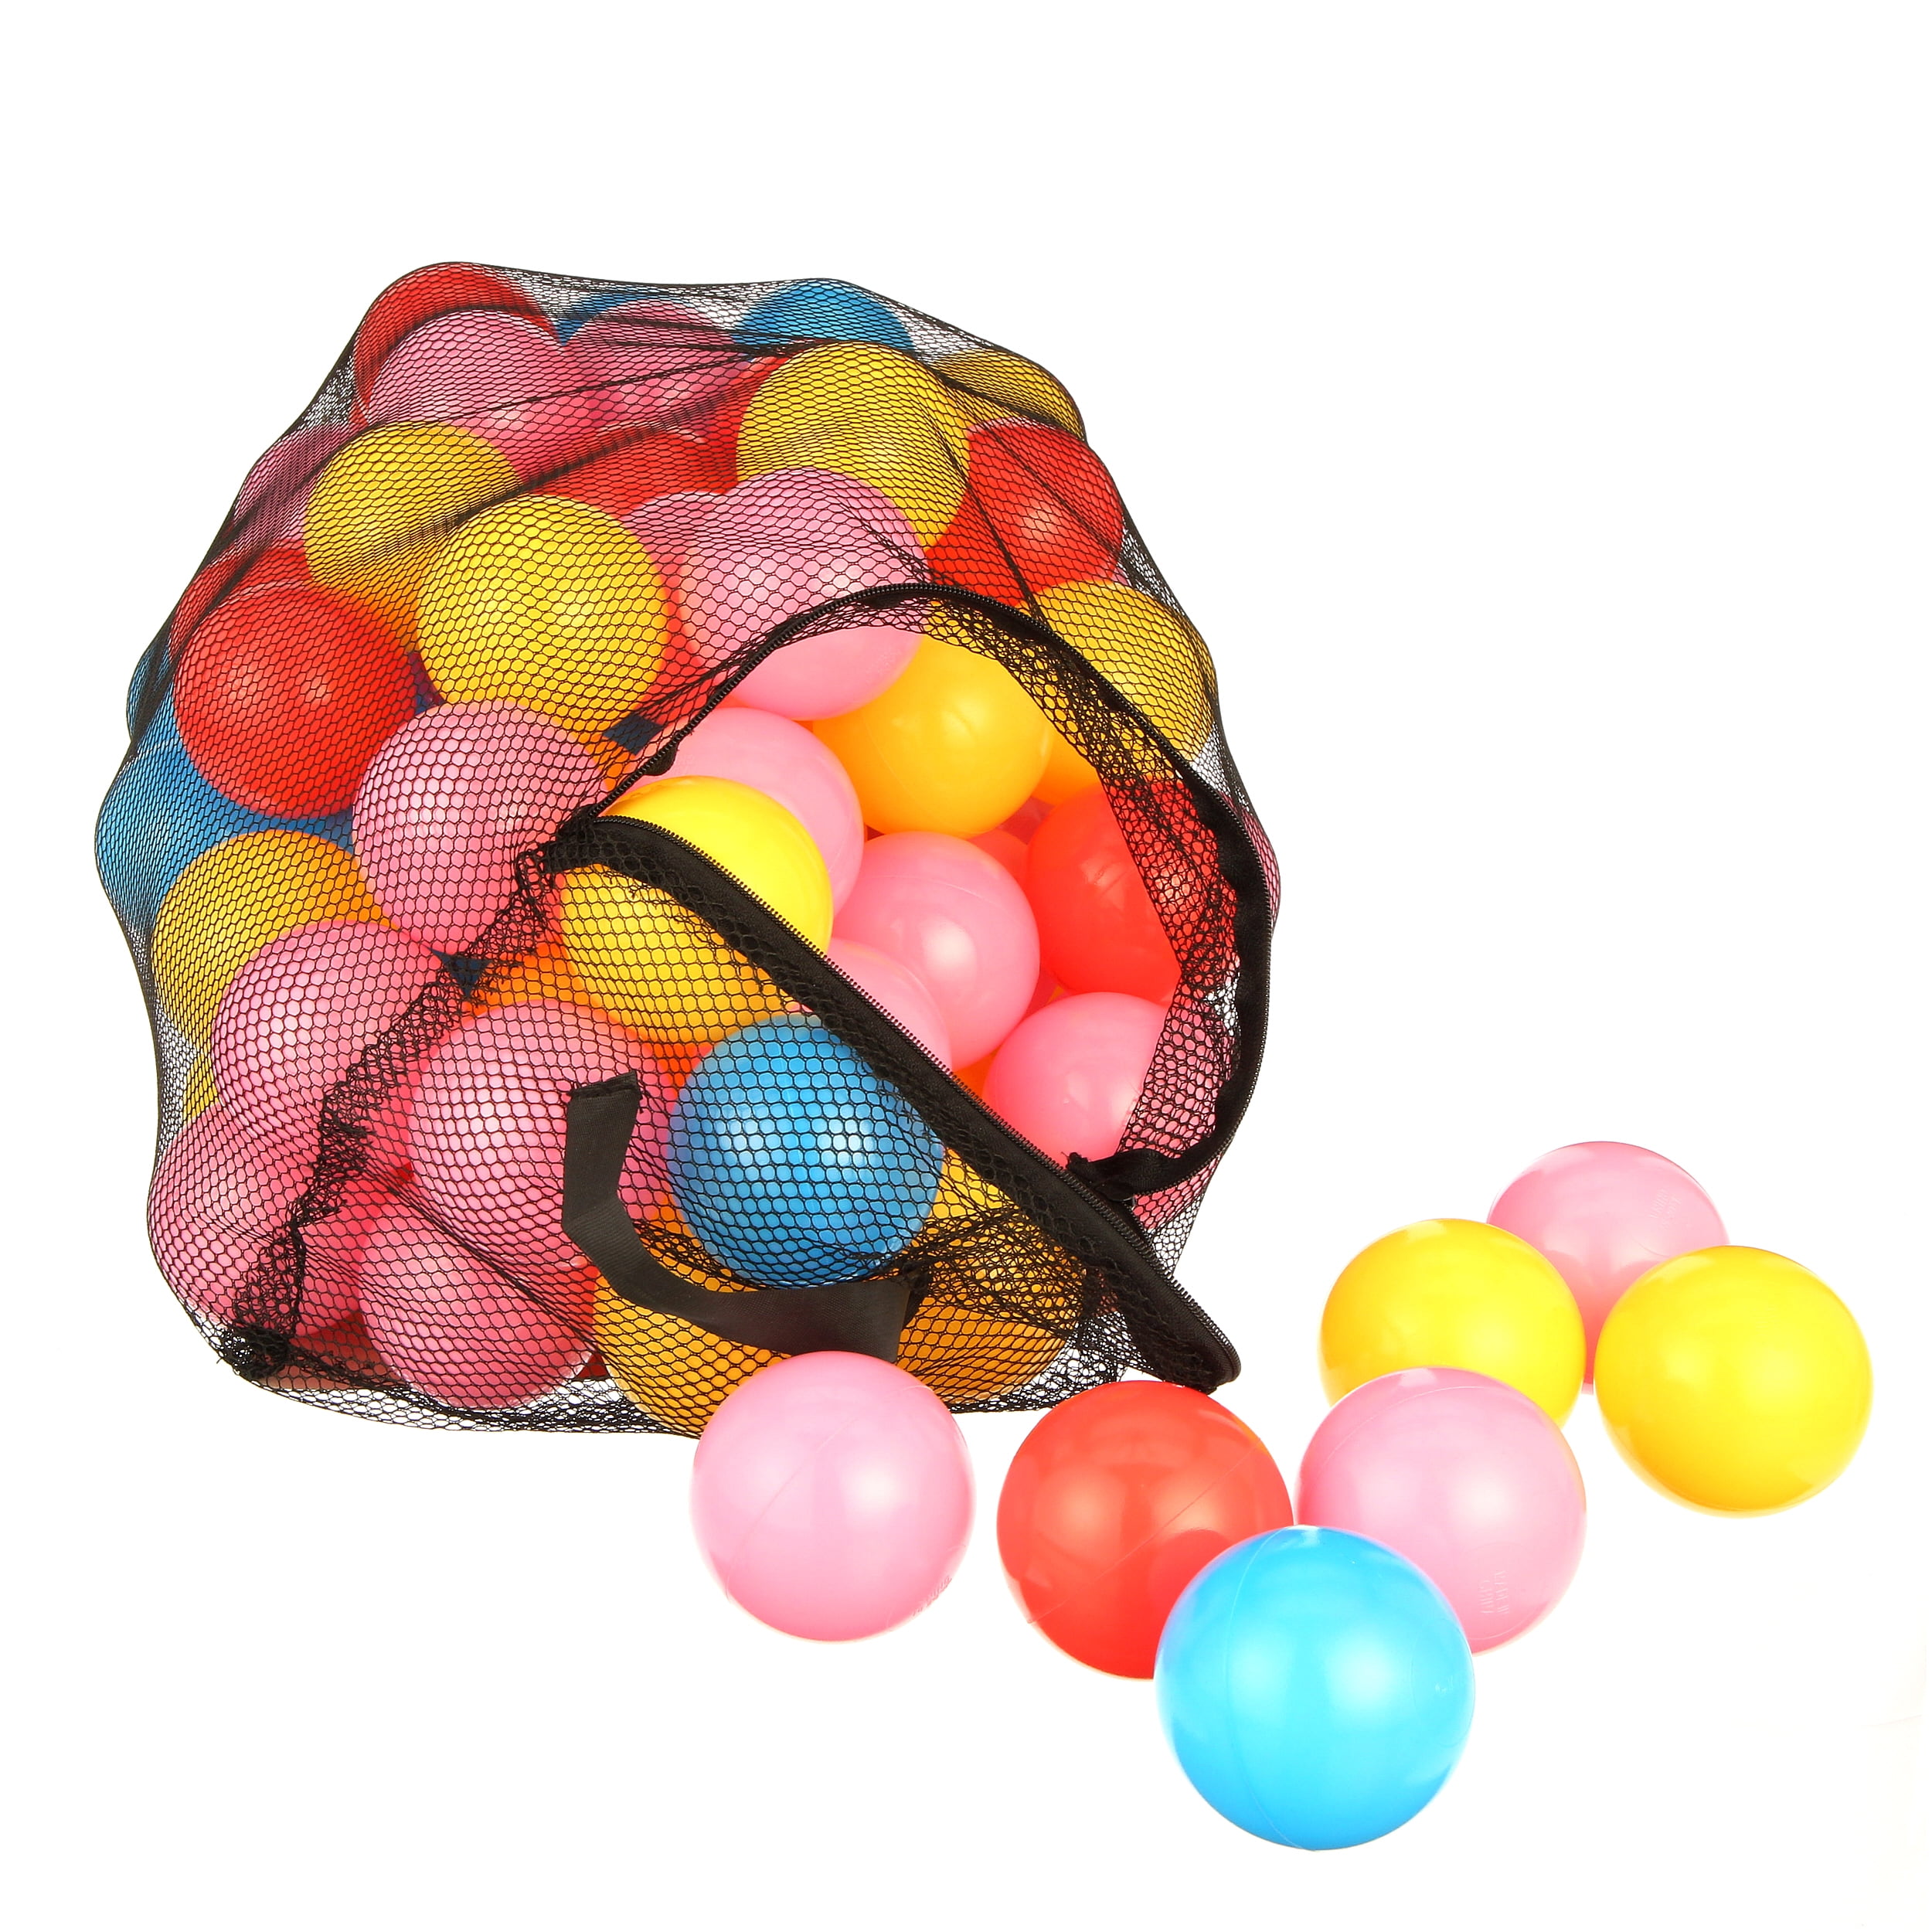 Details about   60*50cm Kids Ball Pit Balls Cloth Storage Net Bag Toys Organizer without _hg 